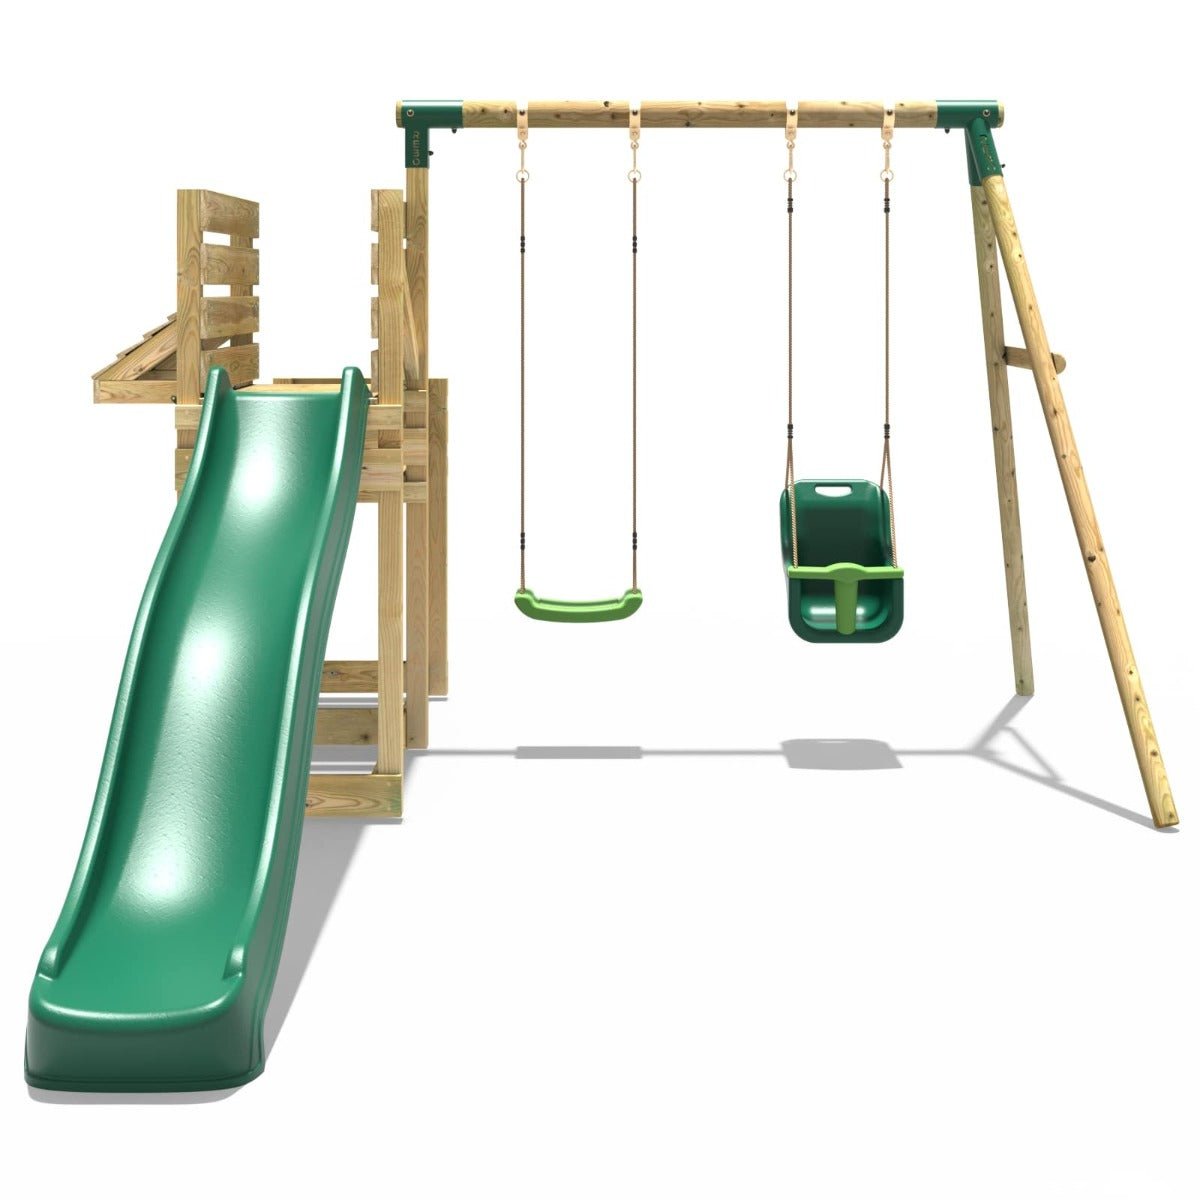 Rebo Wooden Swing Set with Deluxe Add on Deck & 8FT Slide - Luna Green